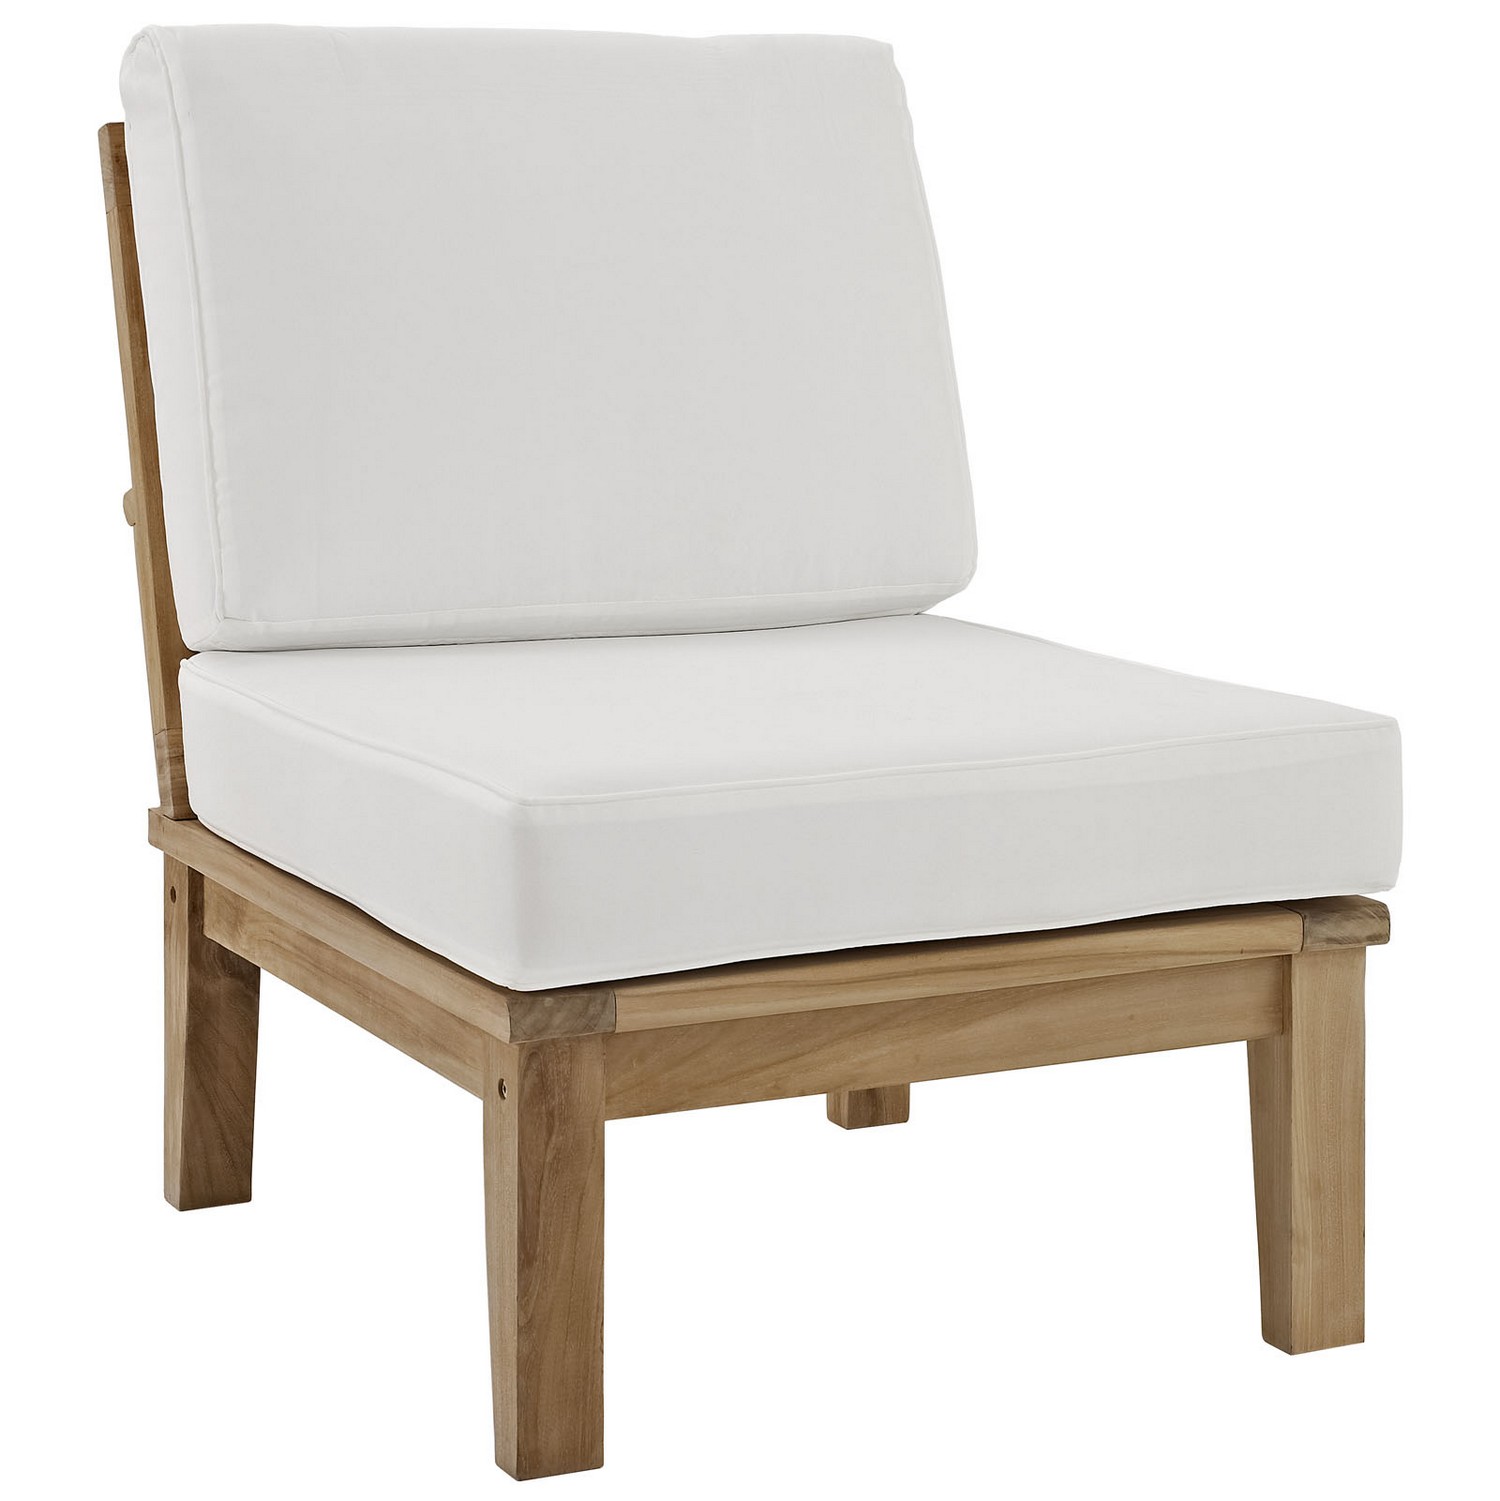 Modway Marina 5 Piece Outdoor Patio Teak Sofa Set - Natural White